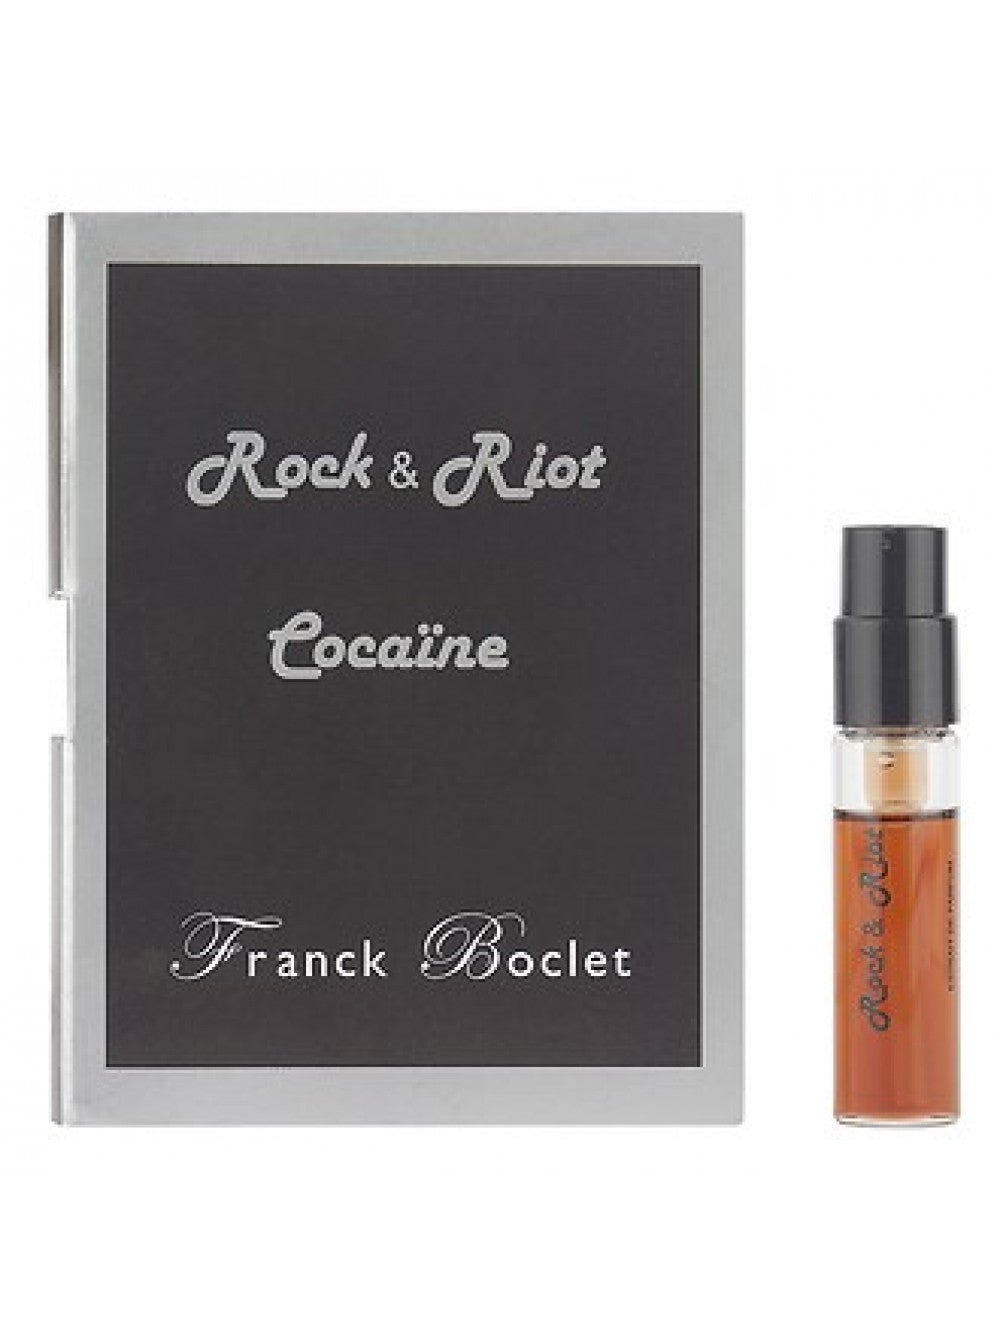 Franck Boclet Kokain resmi koku örneği 1.5ml 0.05 fl. ons